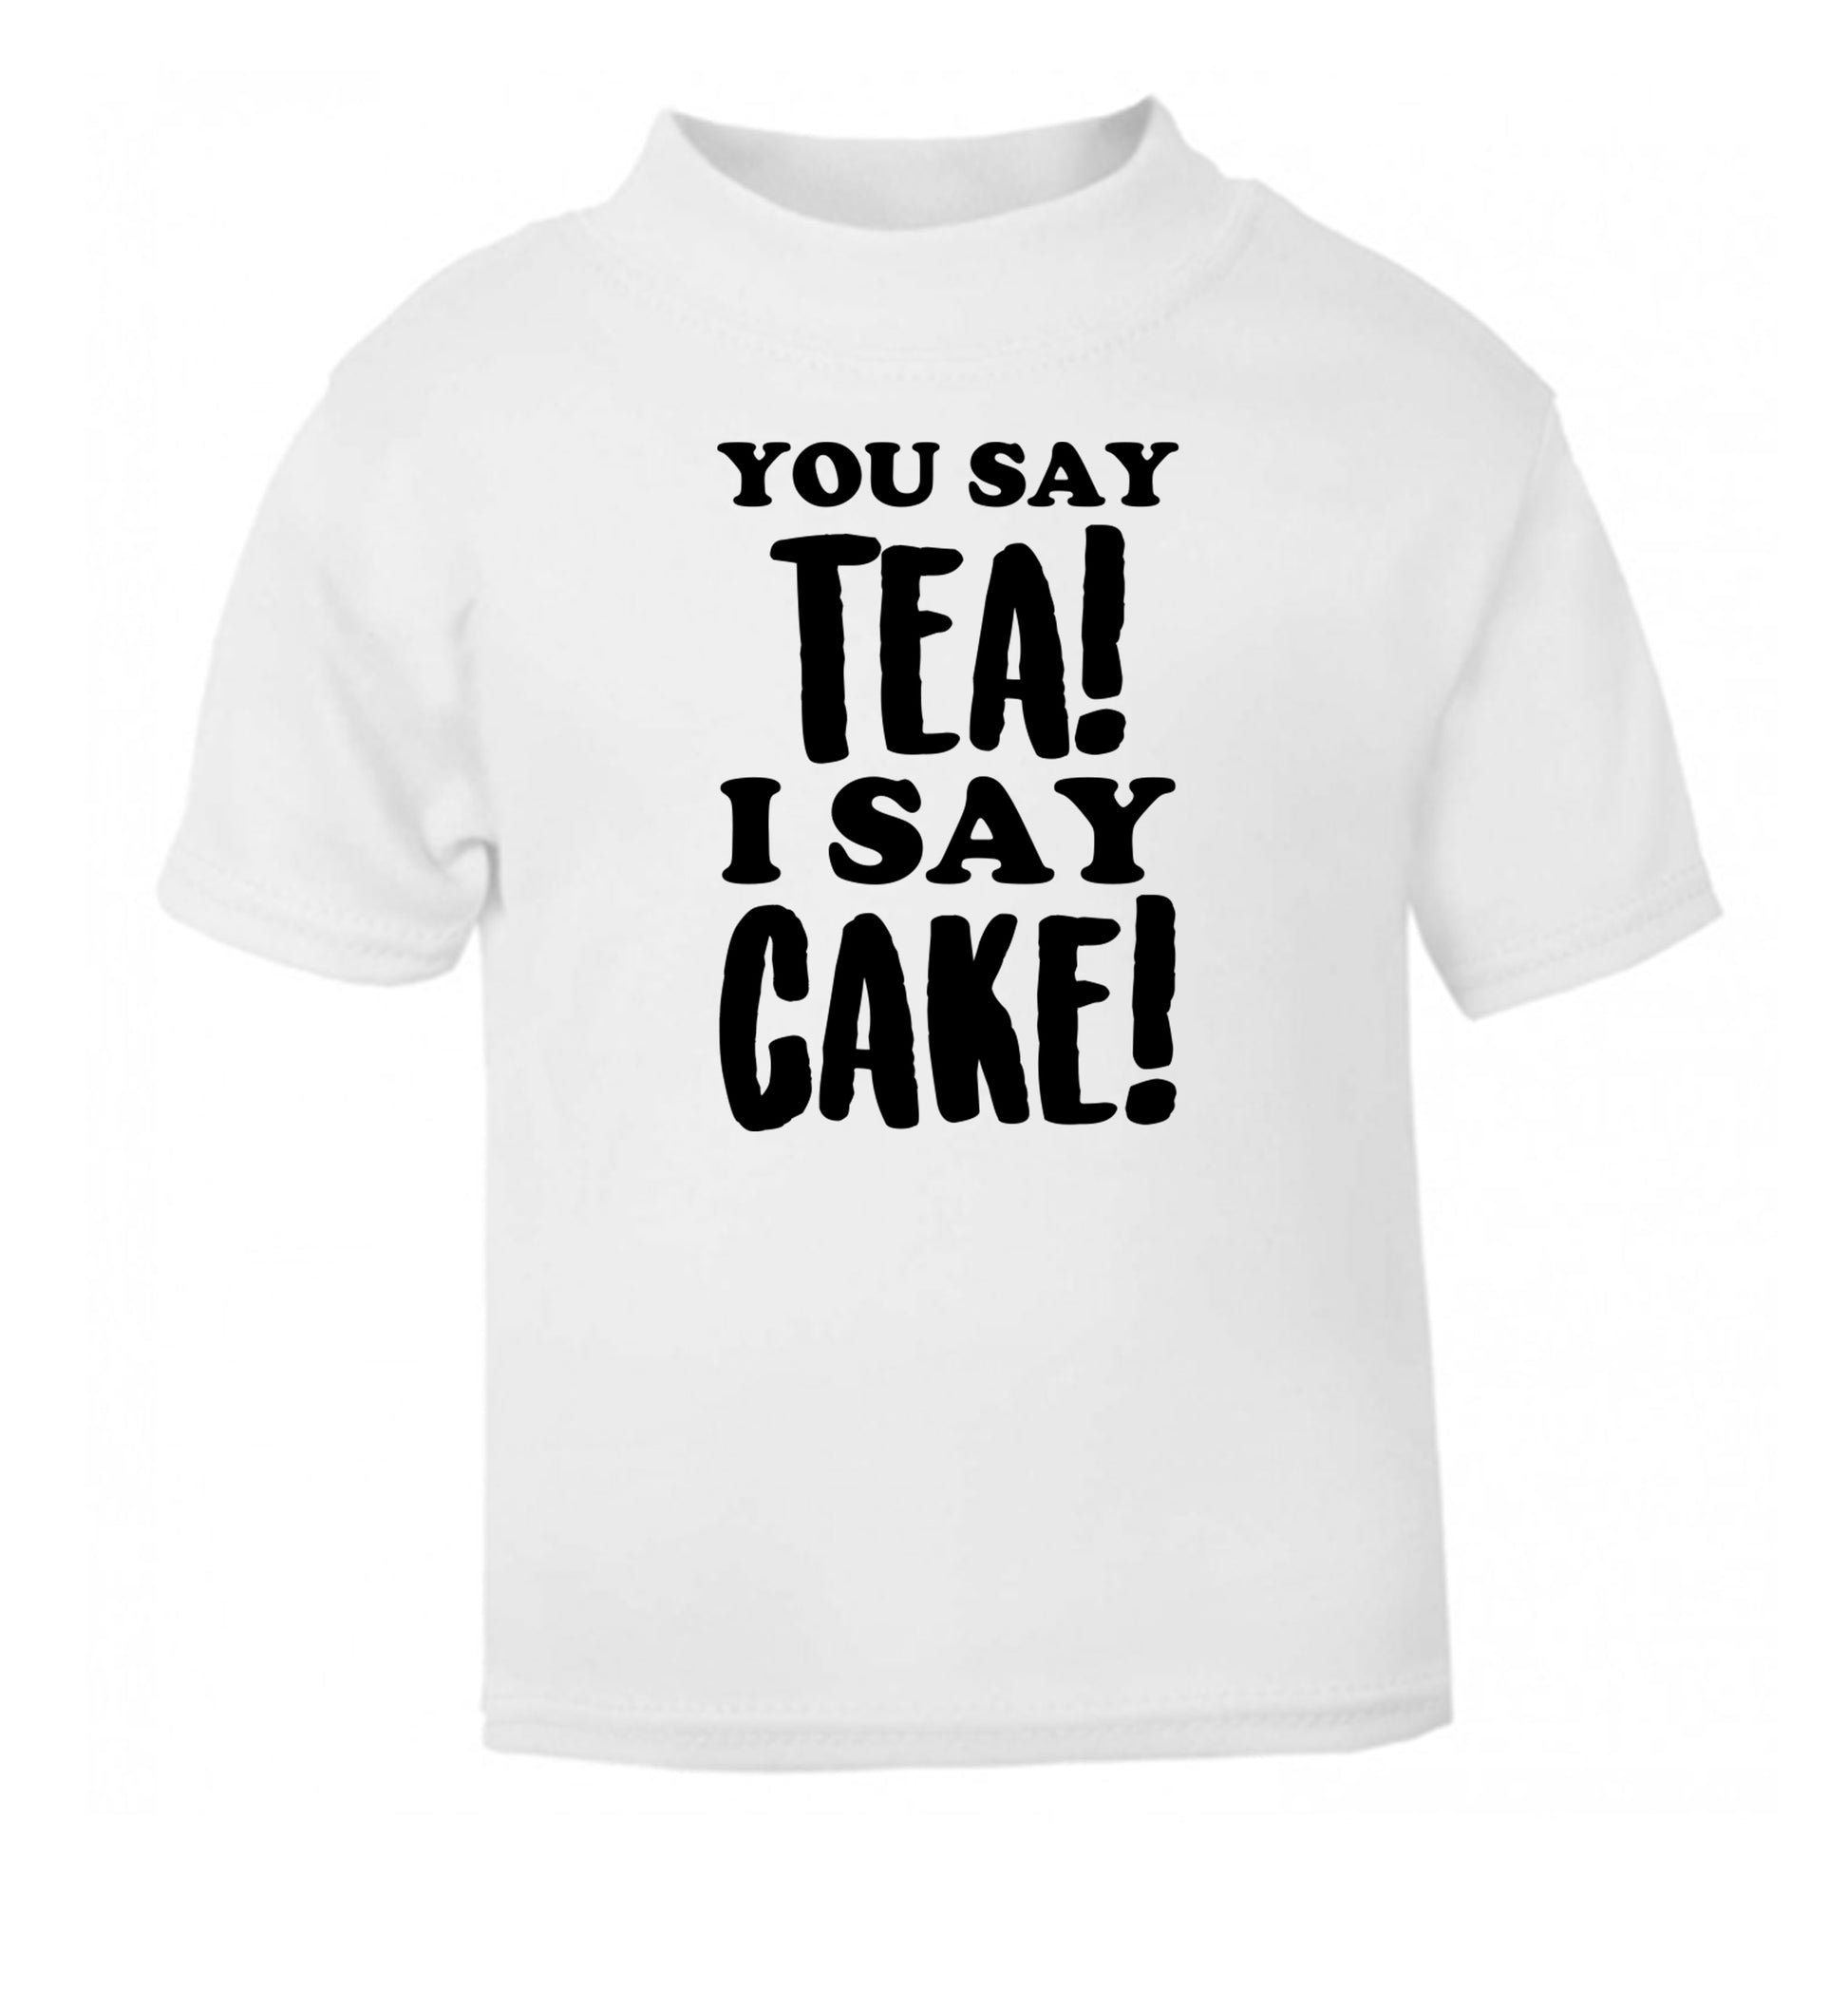 You say tea I say cake! white Baby Toddler Tshirt 2 Years